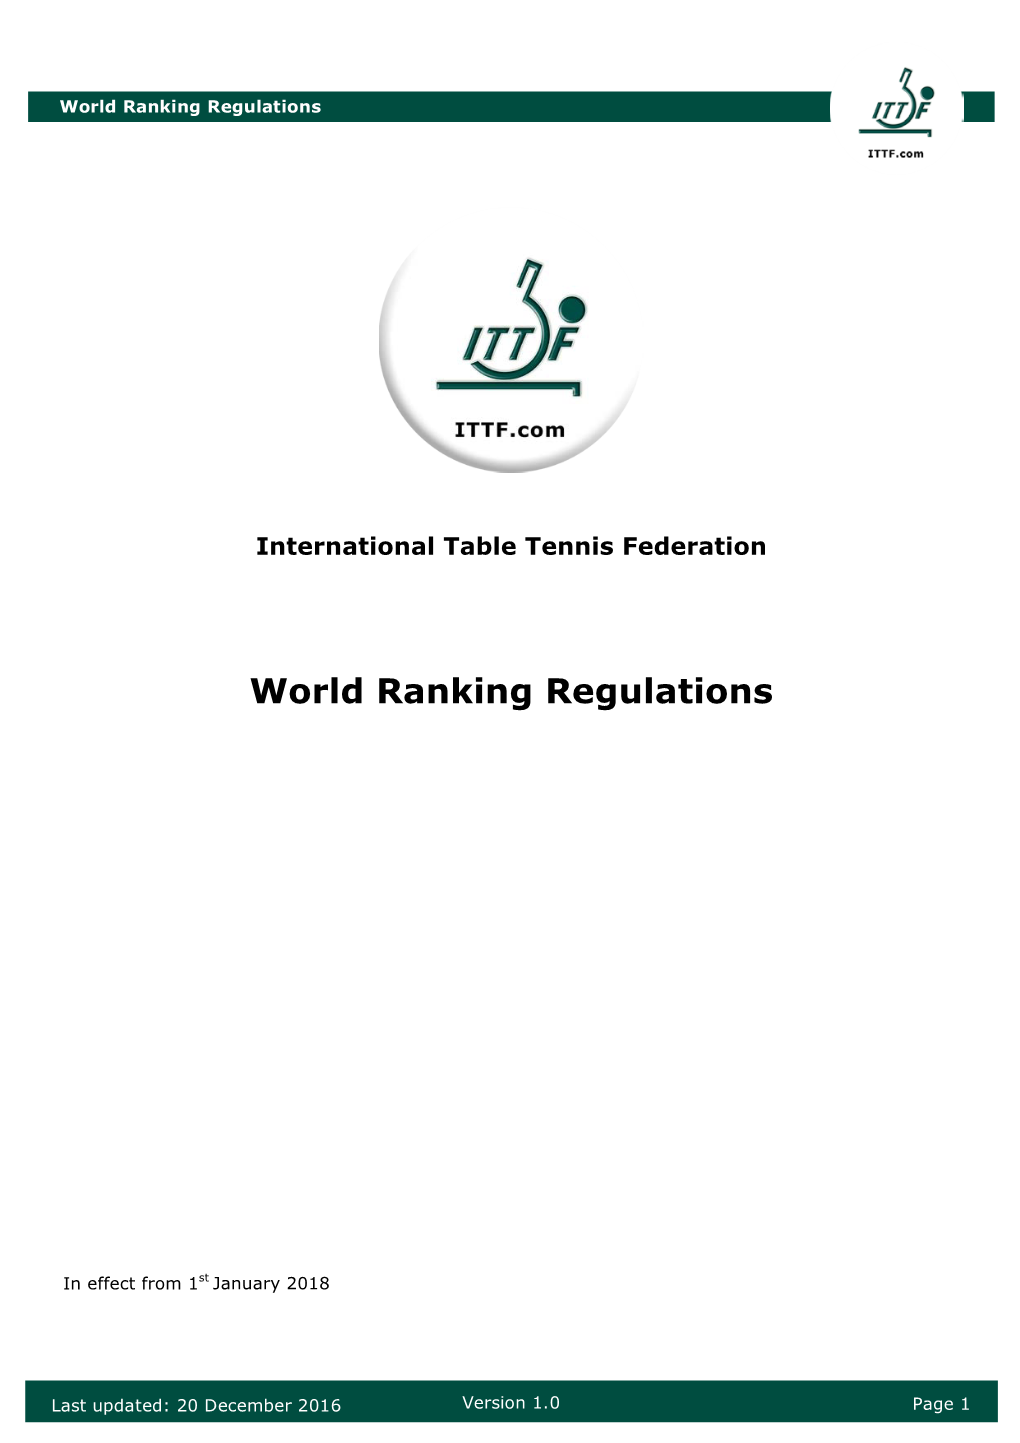 ITTF World Ranking Description 2018